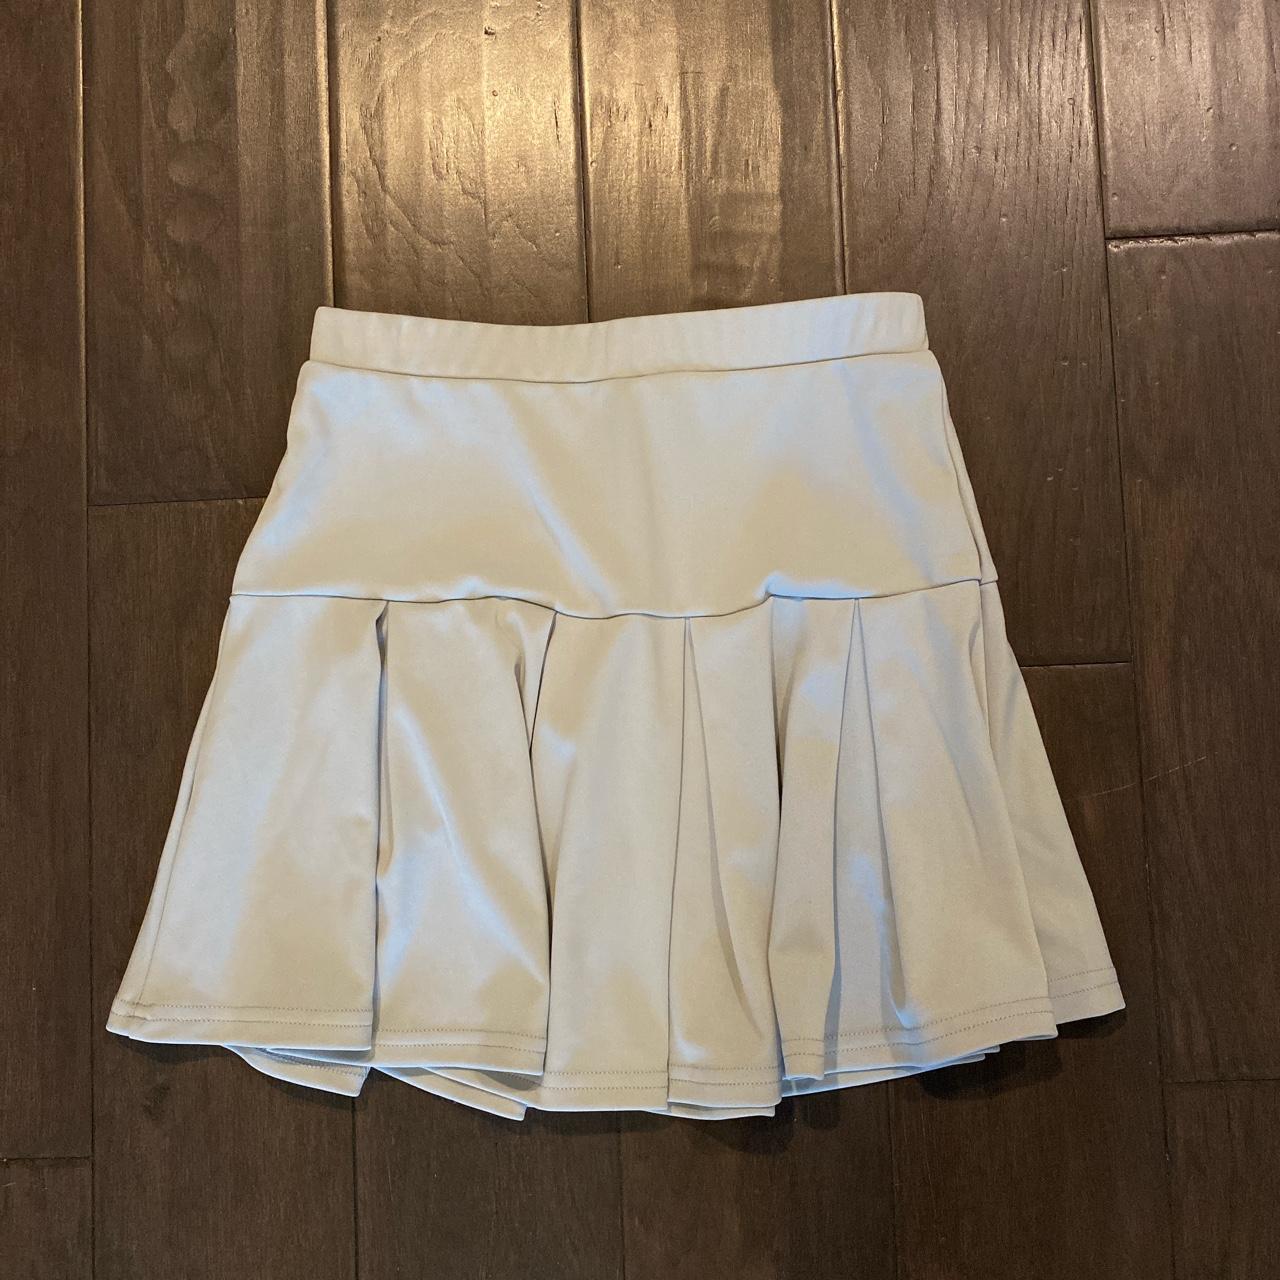 Blue pleated tennis skirt - Depop